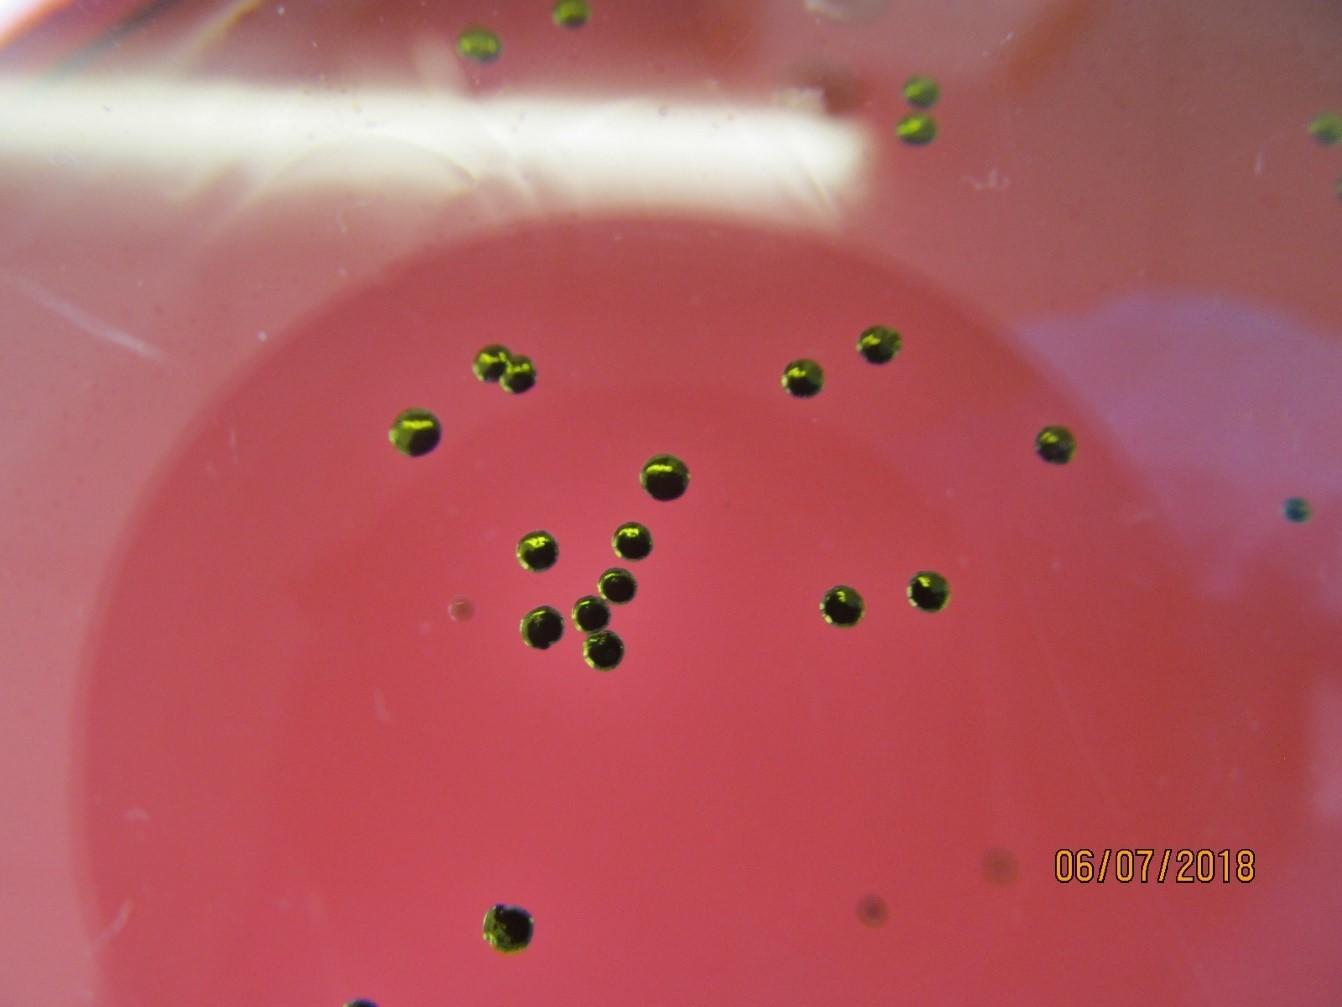 The bacterial strain Gibbsiella quercinecans grows with an iridescent green sheen on Eosin Methylene Blue agar